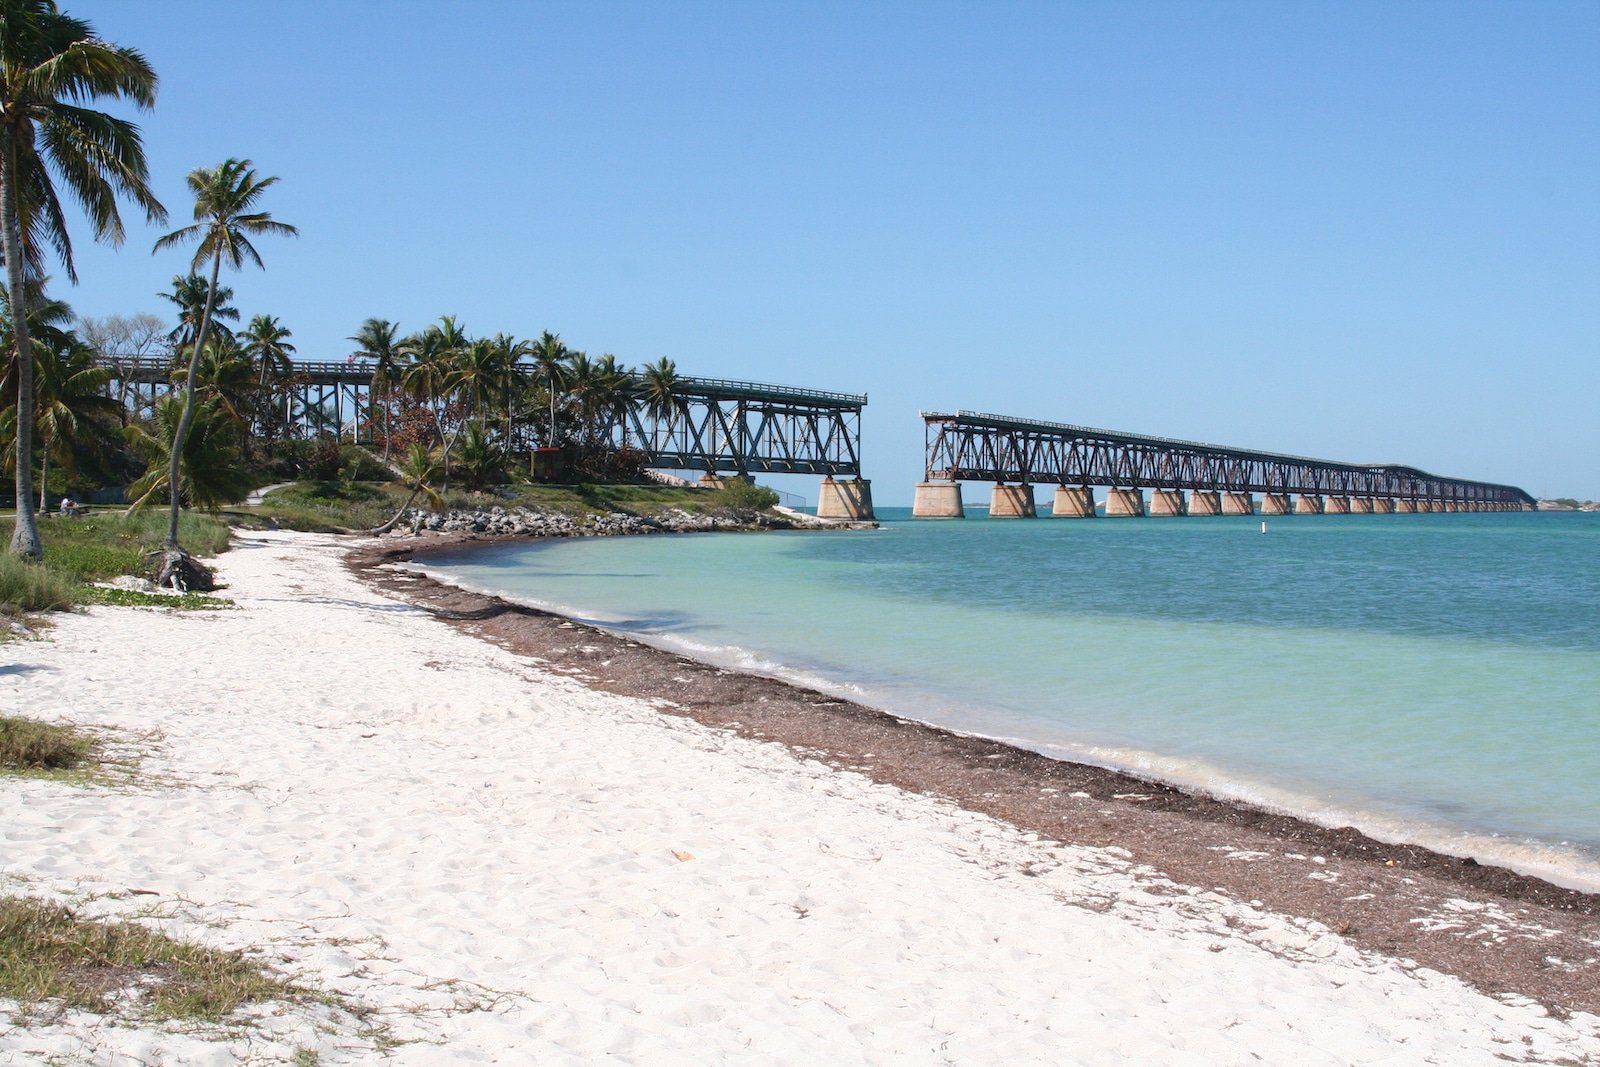 Image of the bridge at Calusa Beach, Florida